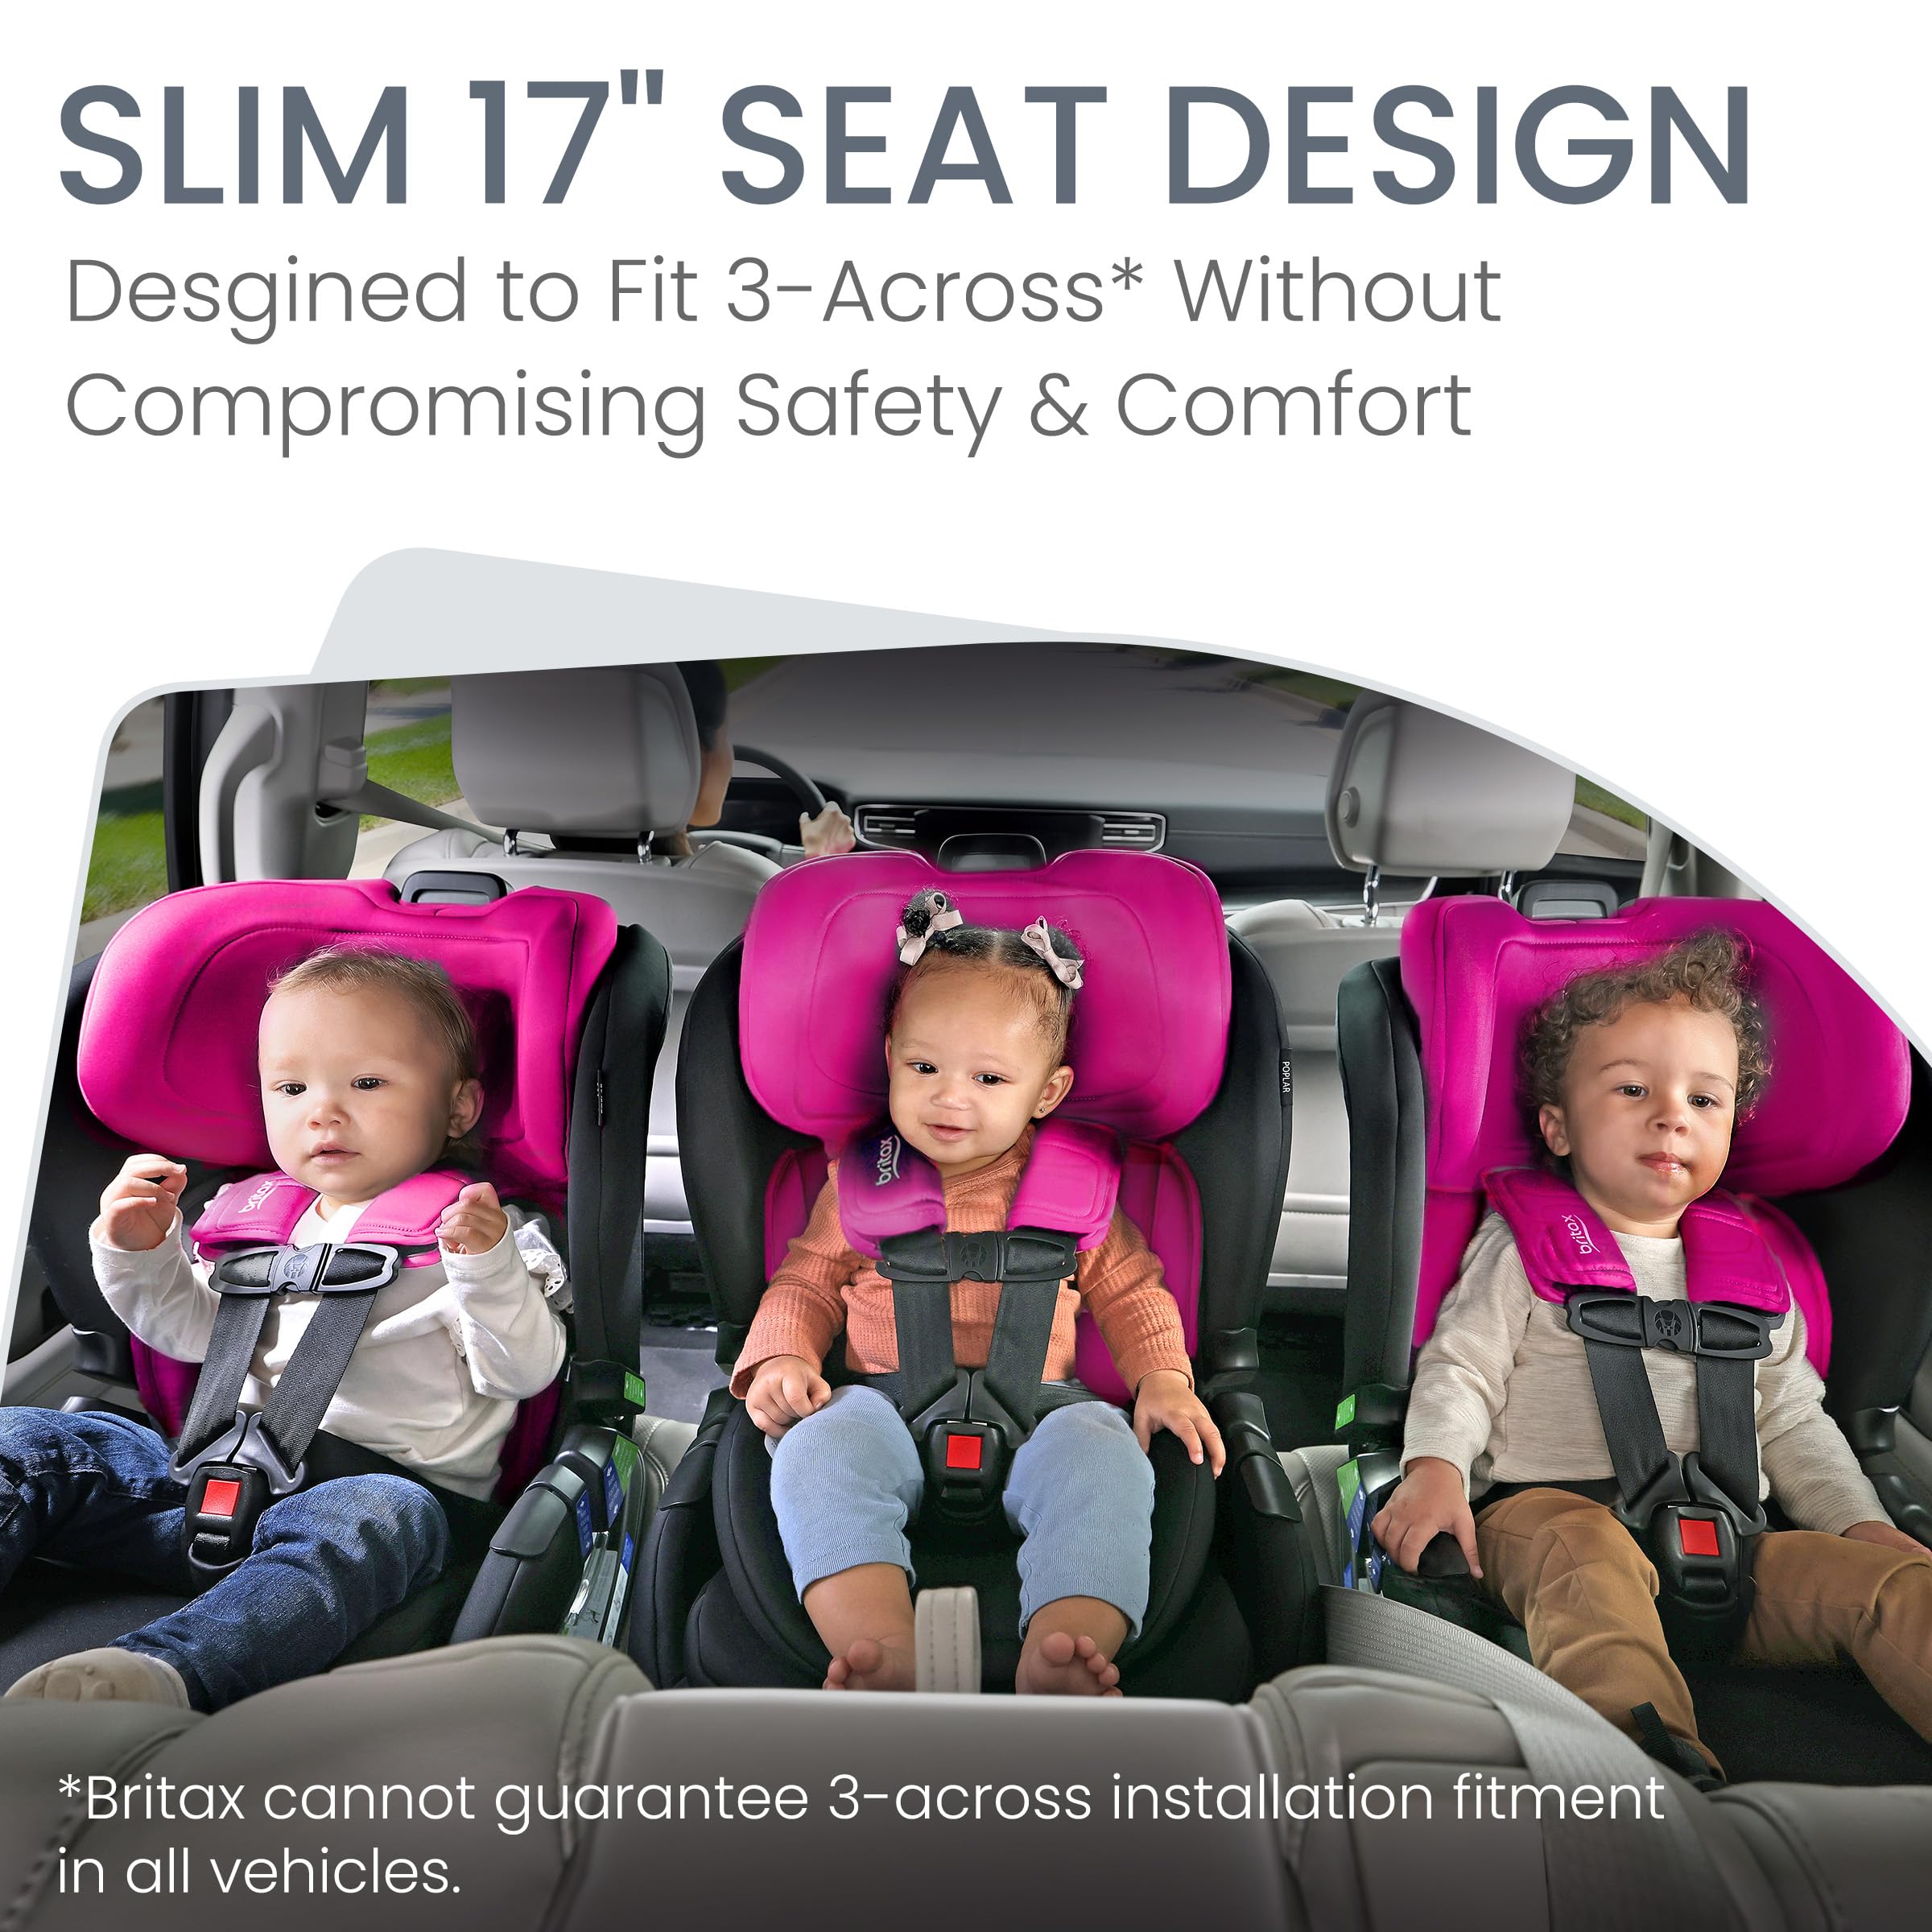 Britax Poplar Convertible Car Seat, 2-in-1 Car Seat with Slim 17-Inch Design, ClickTight Technology, Magenta Onyx